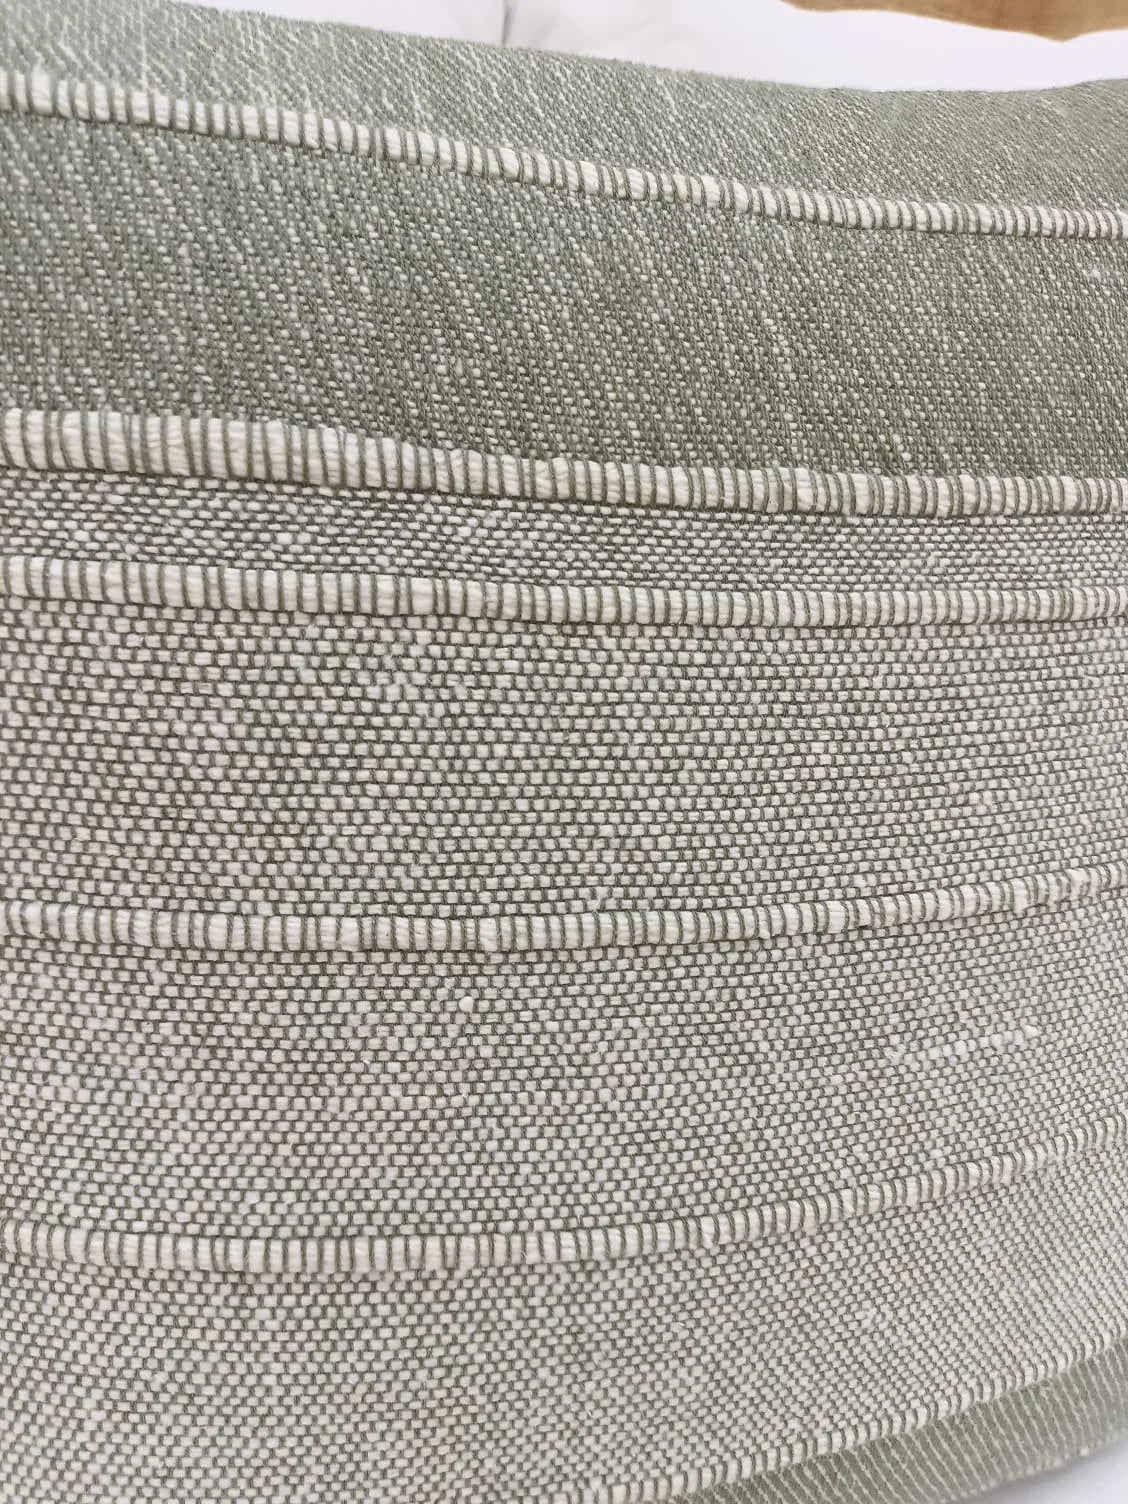 Textured Cotton Boho fringes Cushion Cover